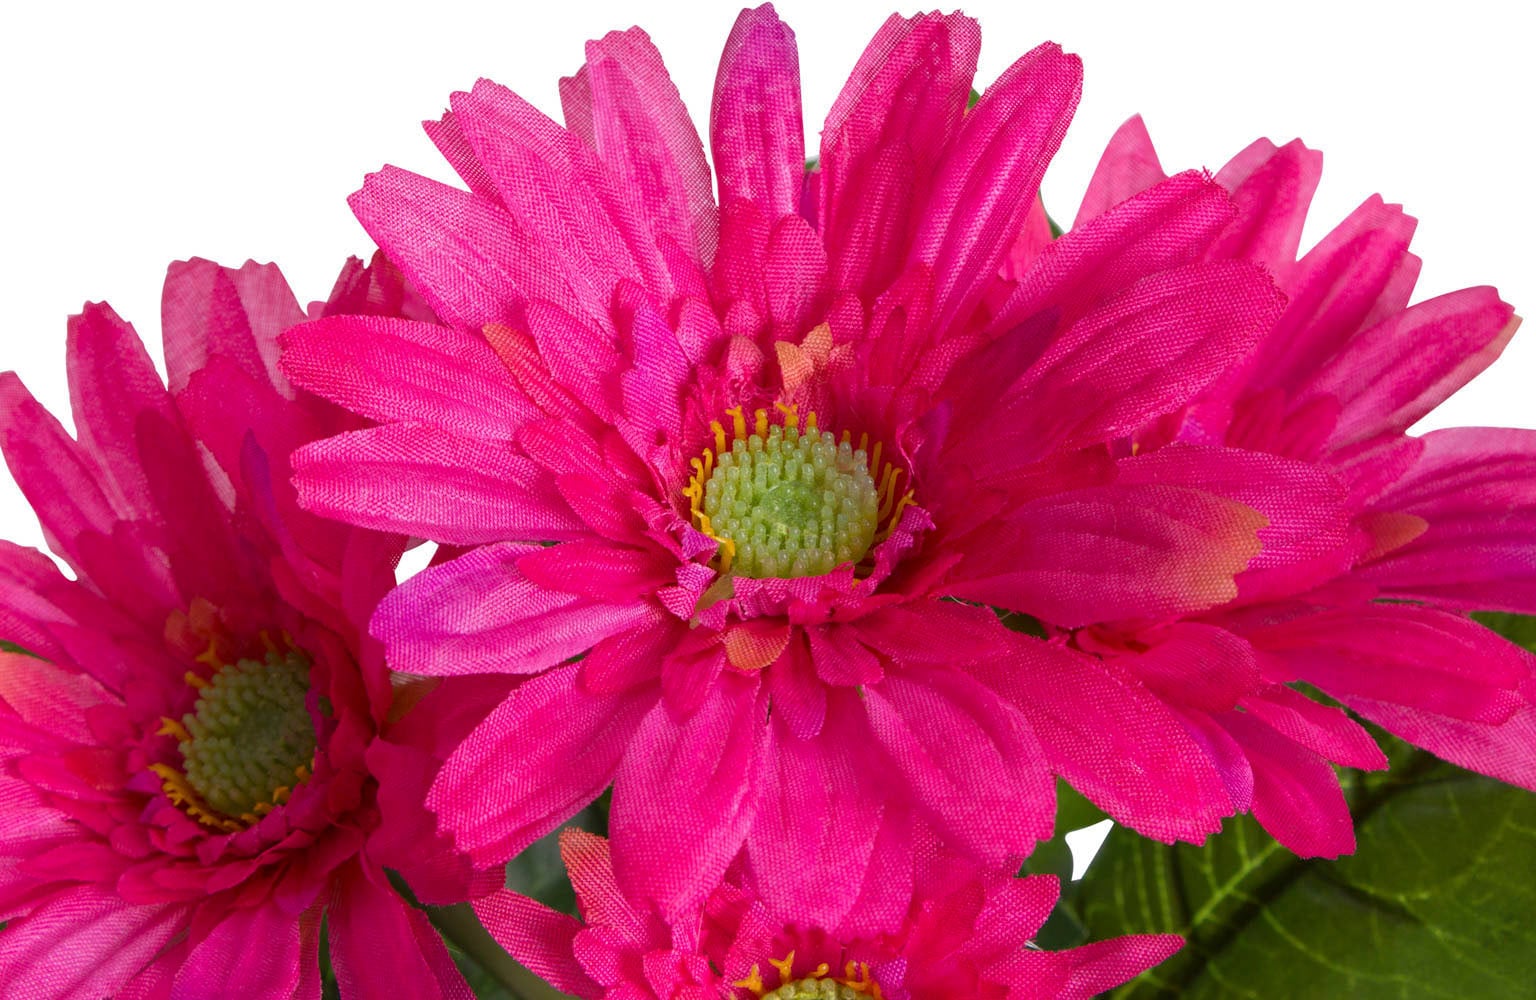 Botanic-Haus Kunstblume »Gerbera mit 5 Blüten« günstig kaufen